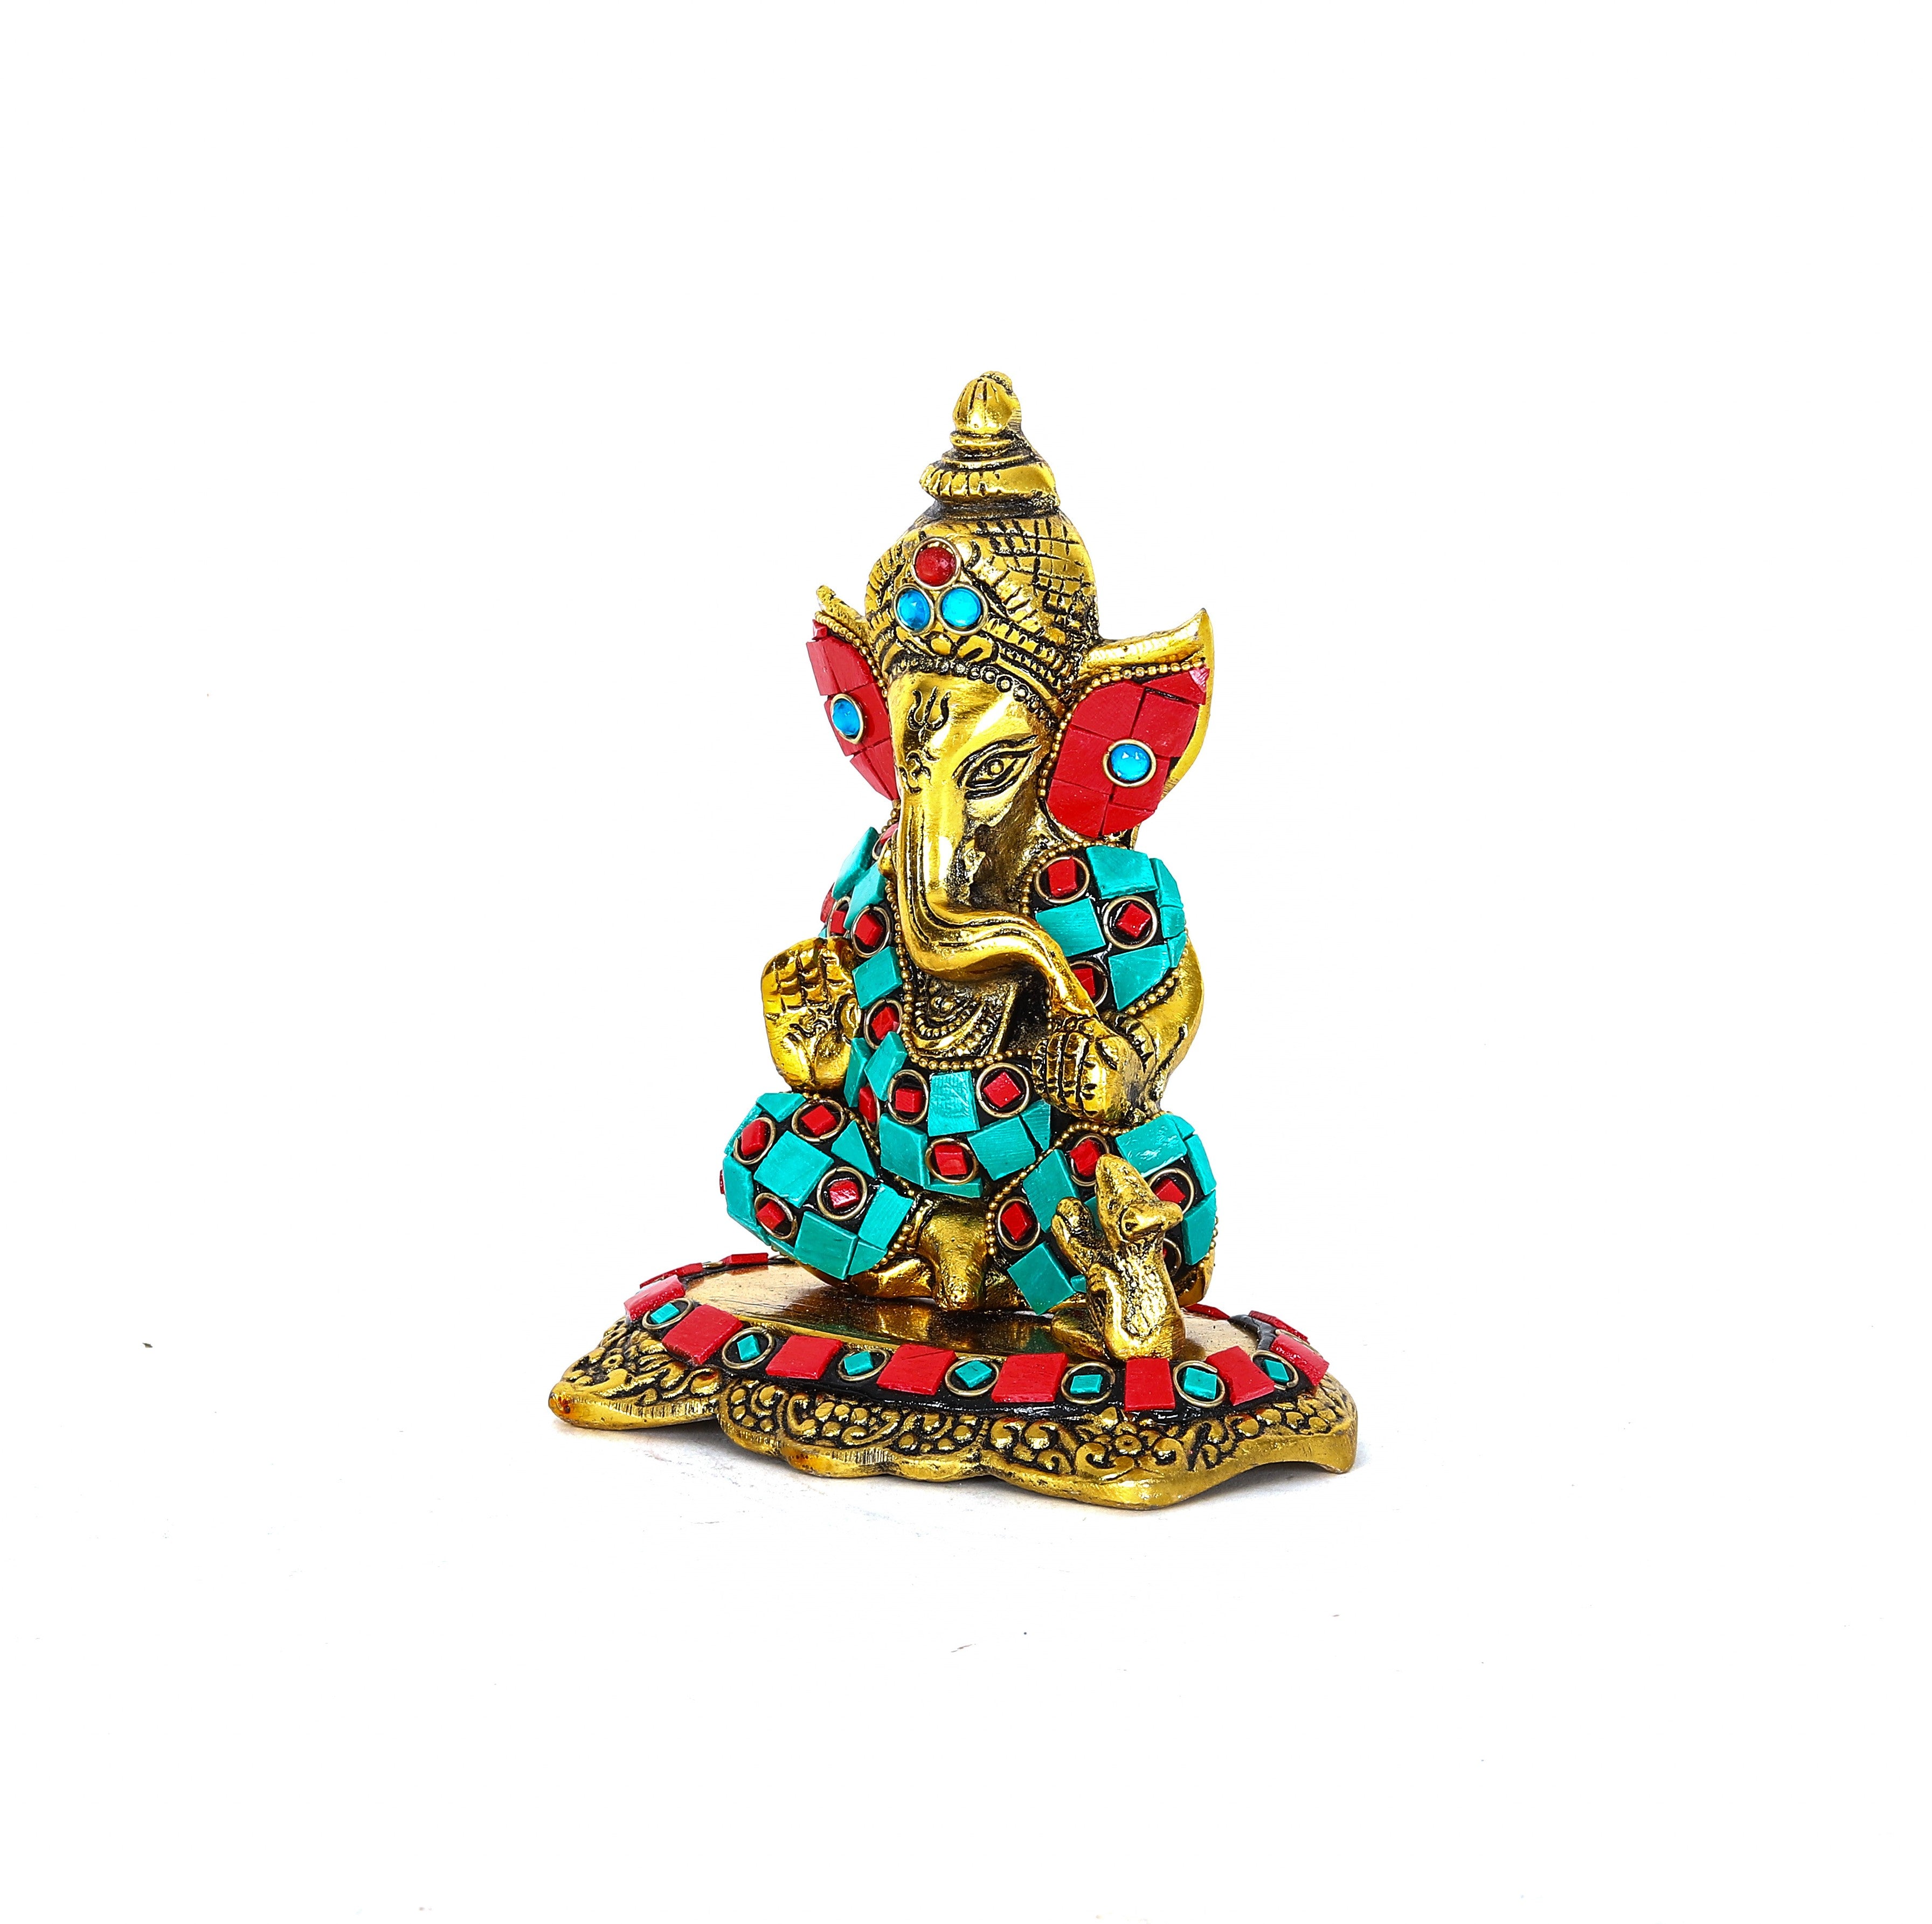 Metal Lord Ganesh Idol